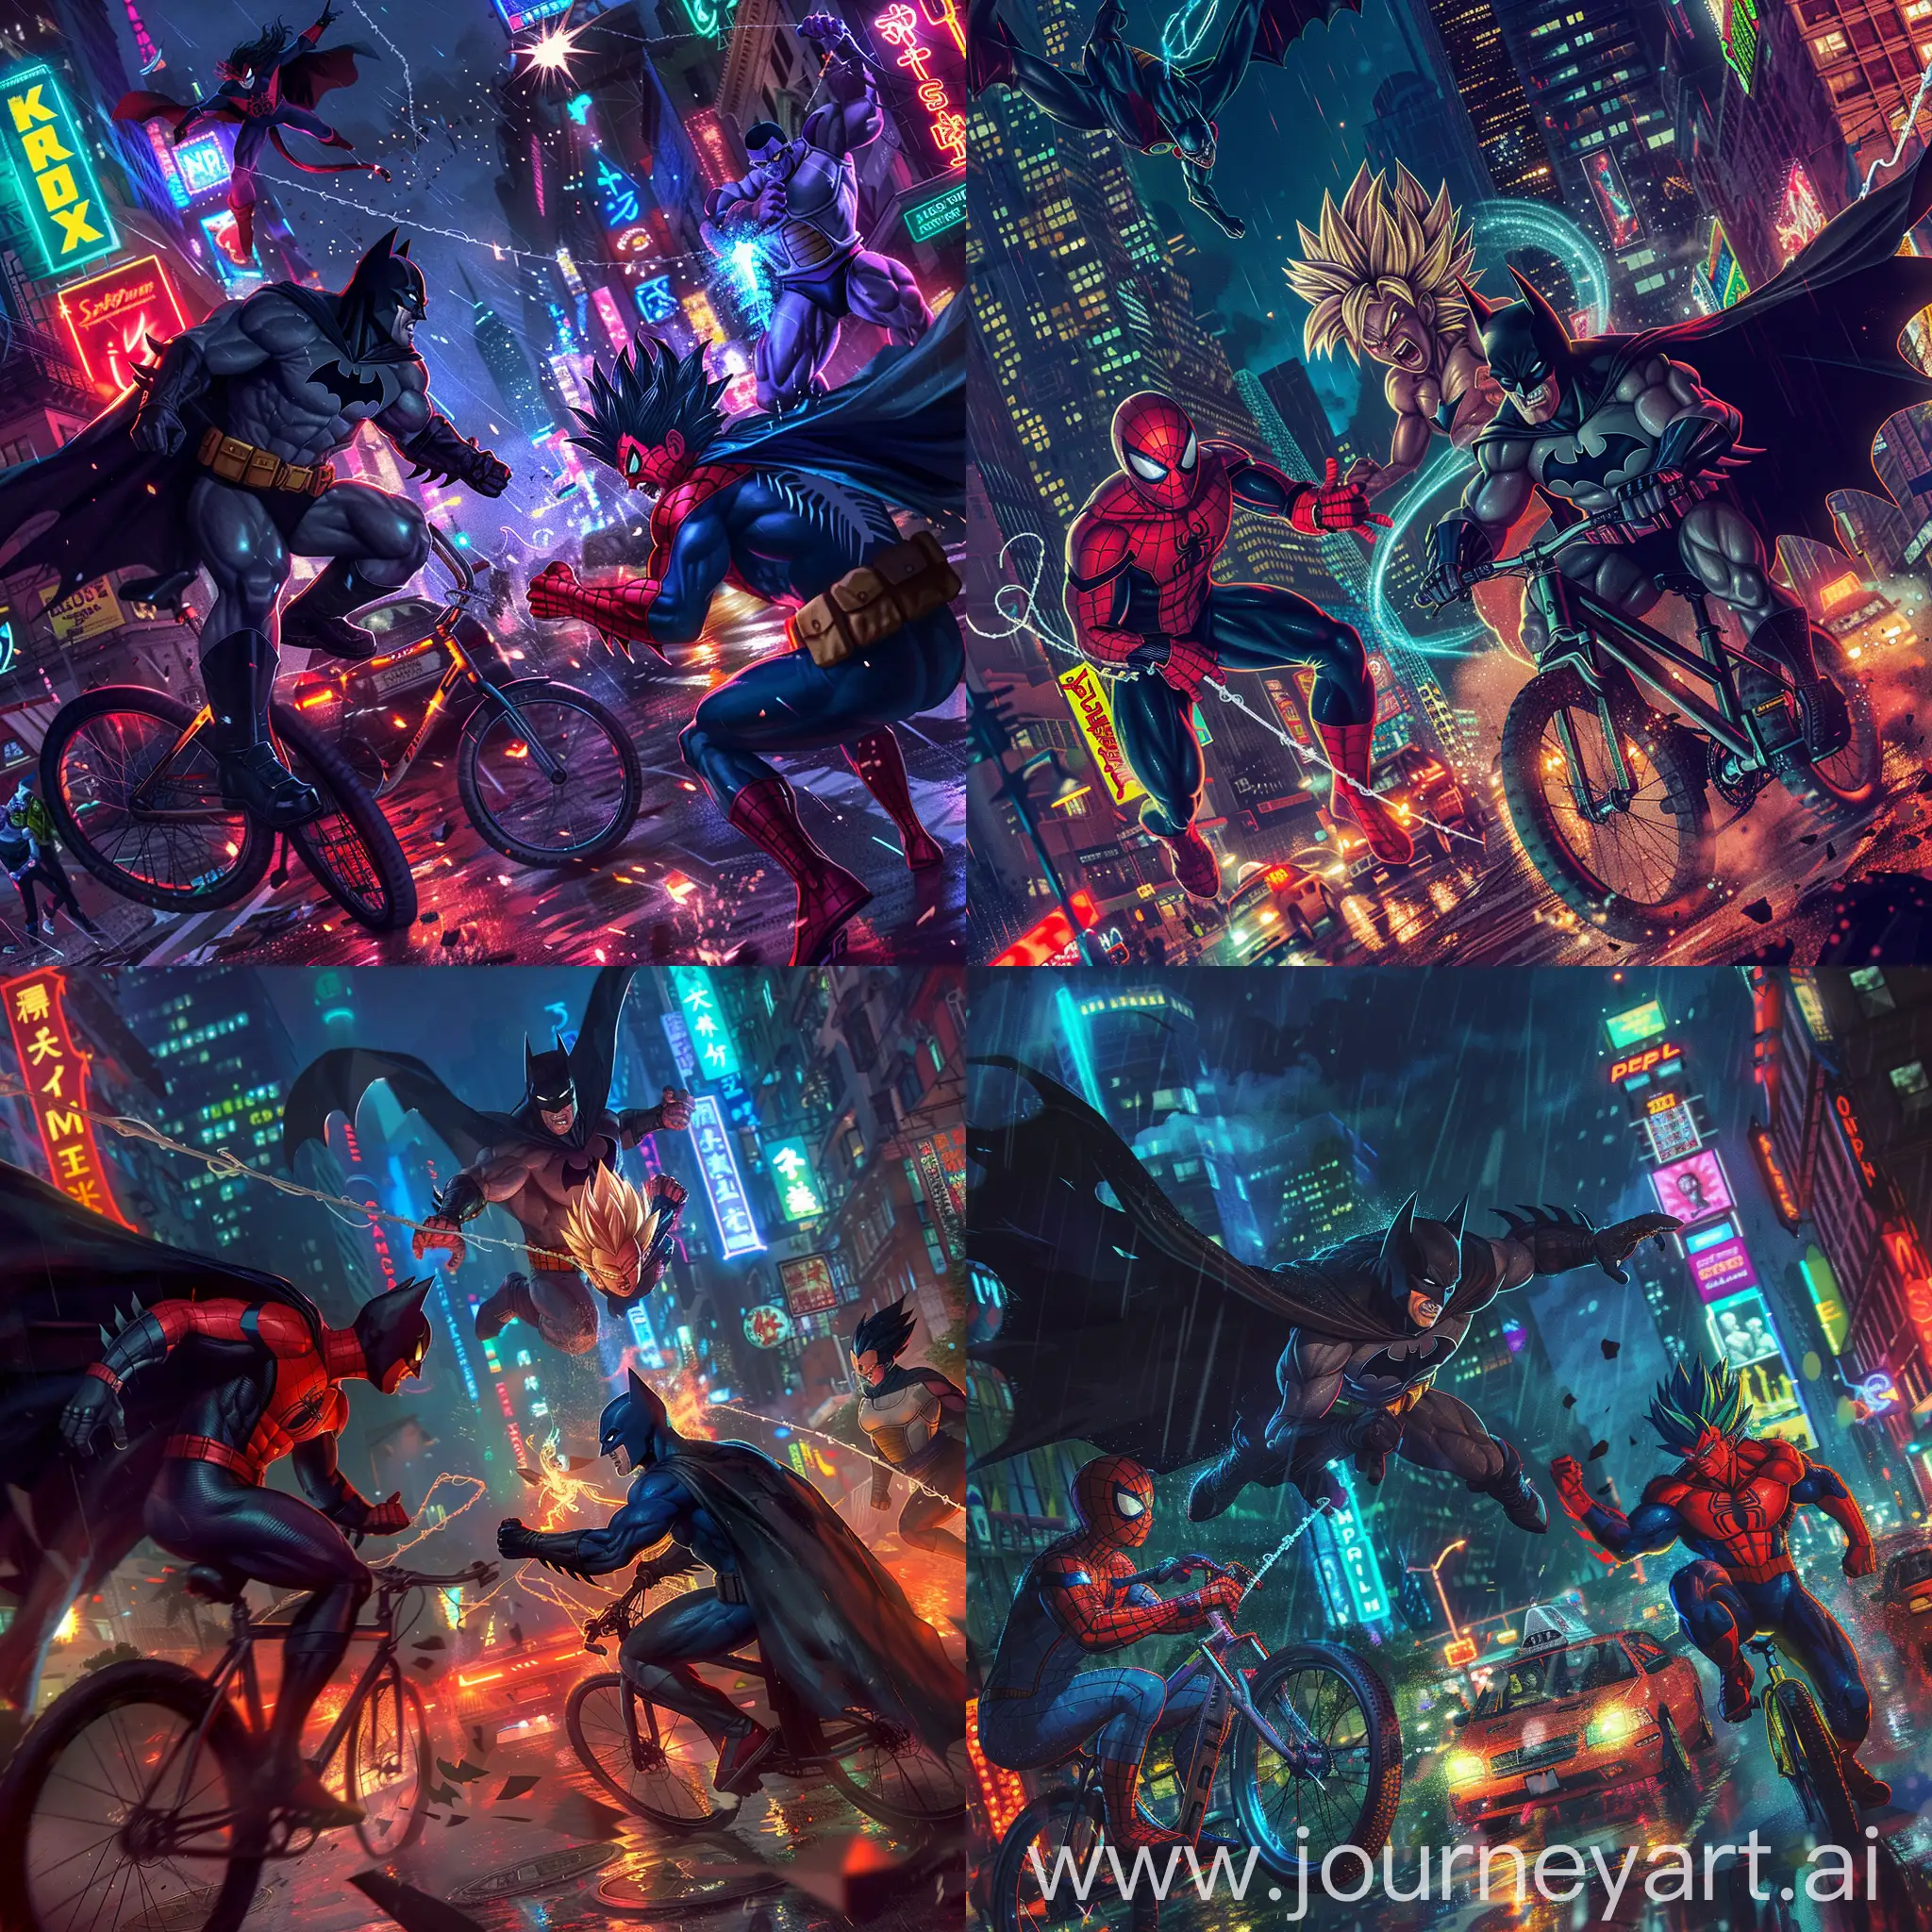 Epic-Nighttime-Battle-Batman-SpiderMan-and-Goku-Clash-in-Neon-Urban-Cityscape